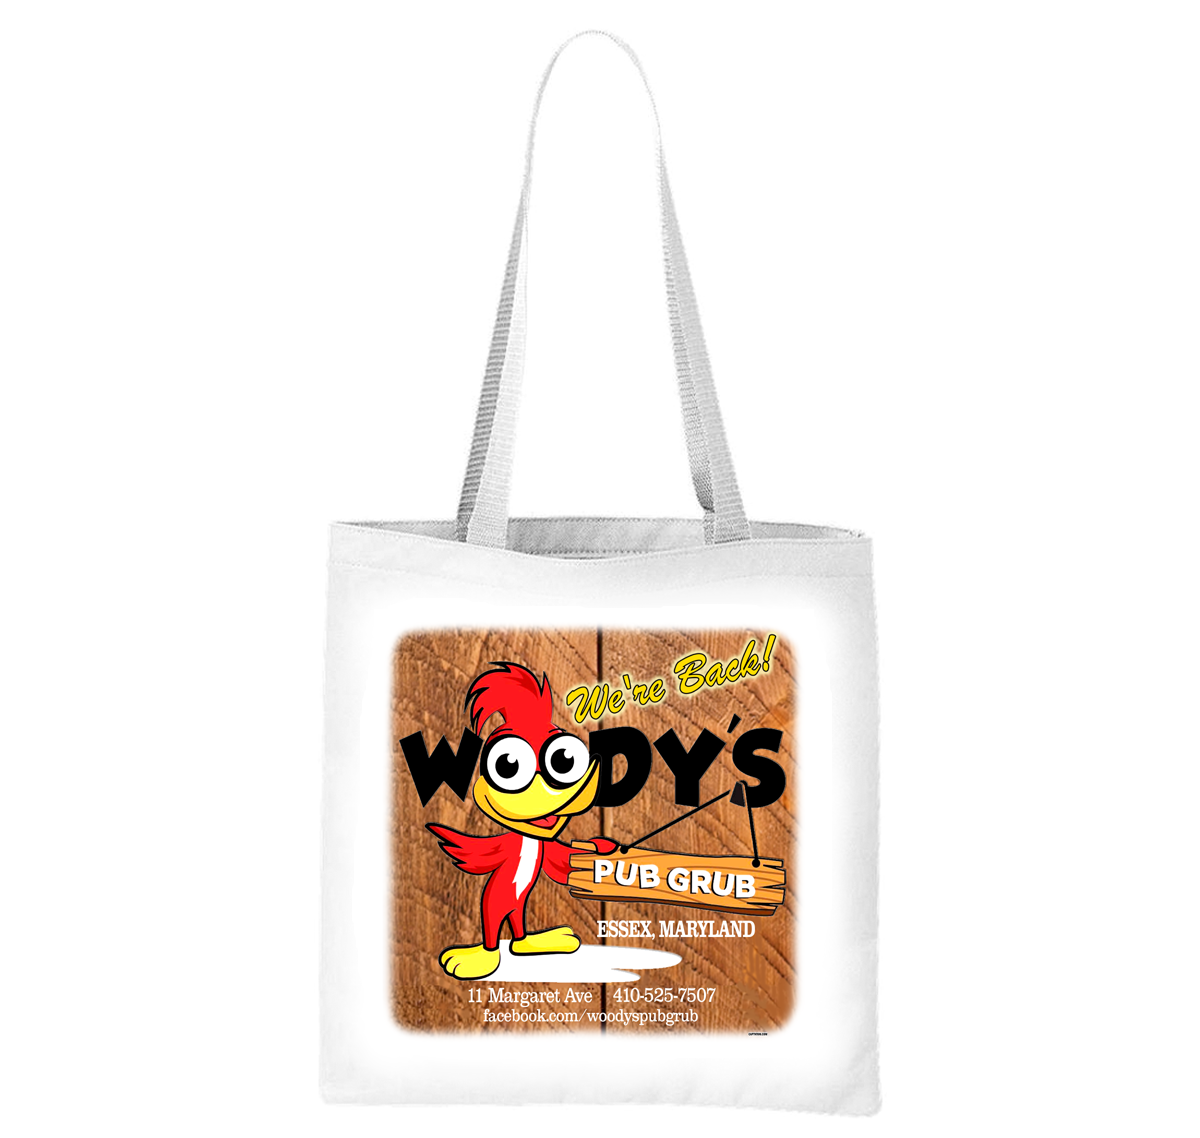 Woody's Pub Grub - We're Back Liberty Bag